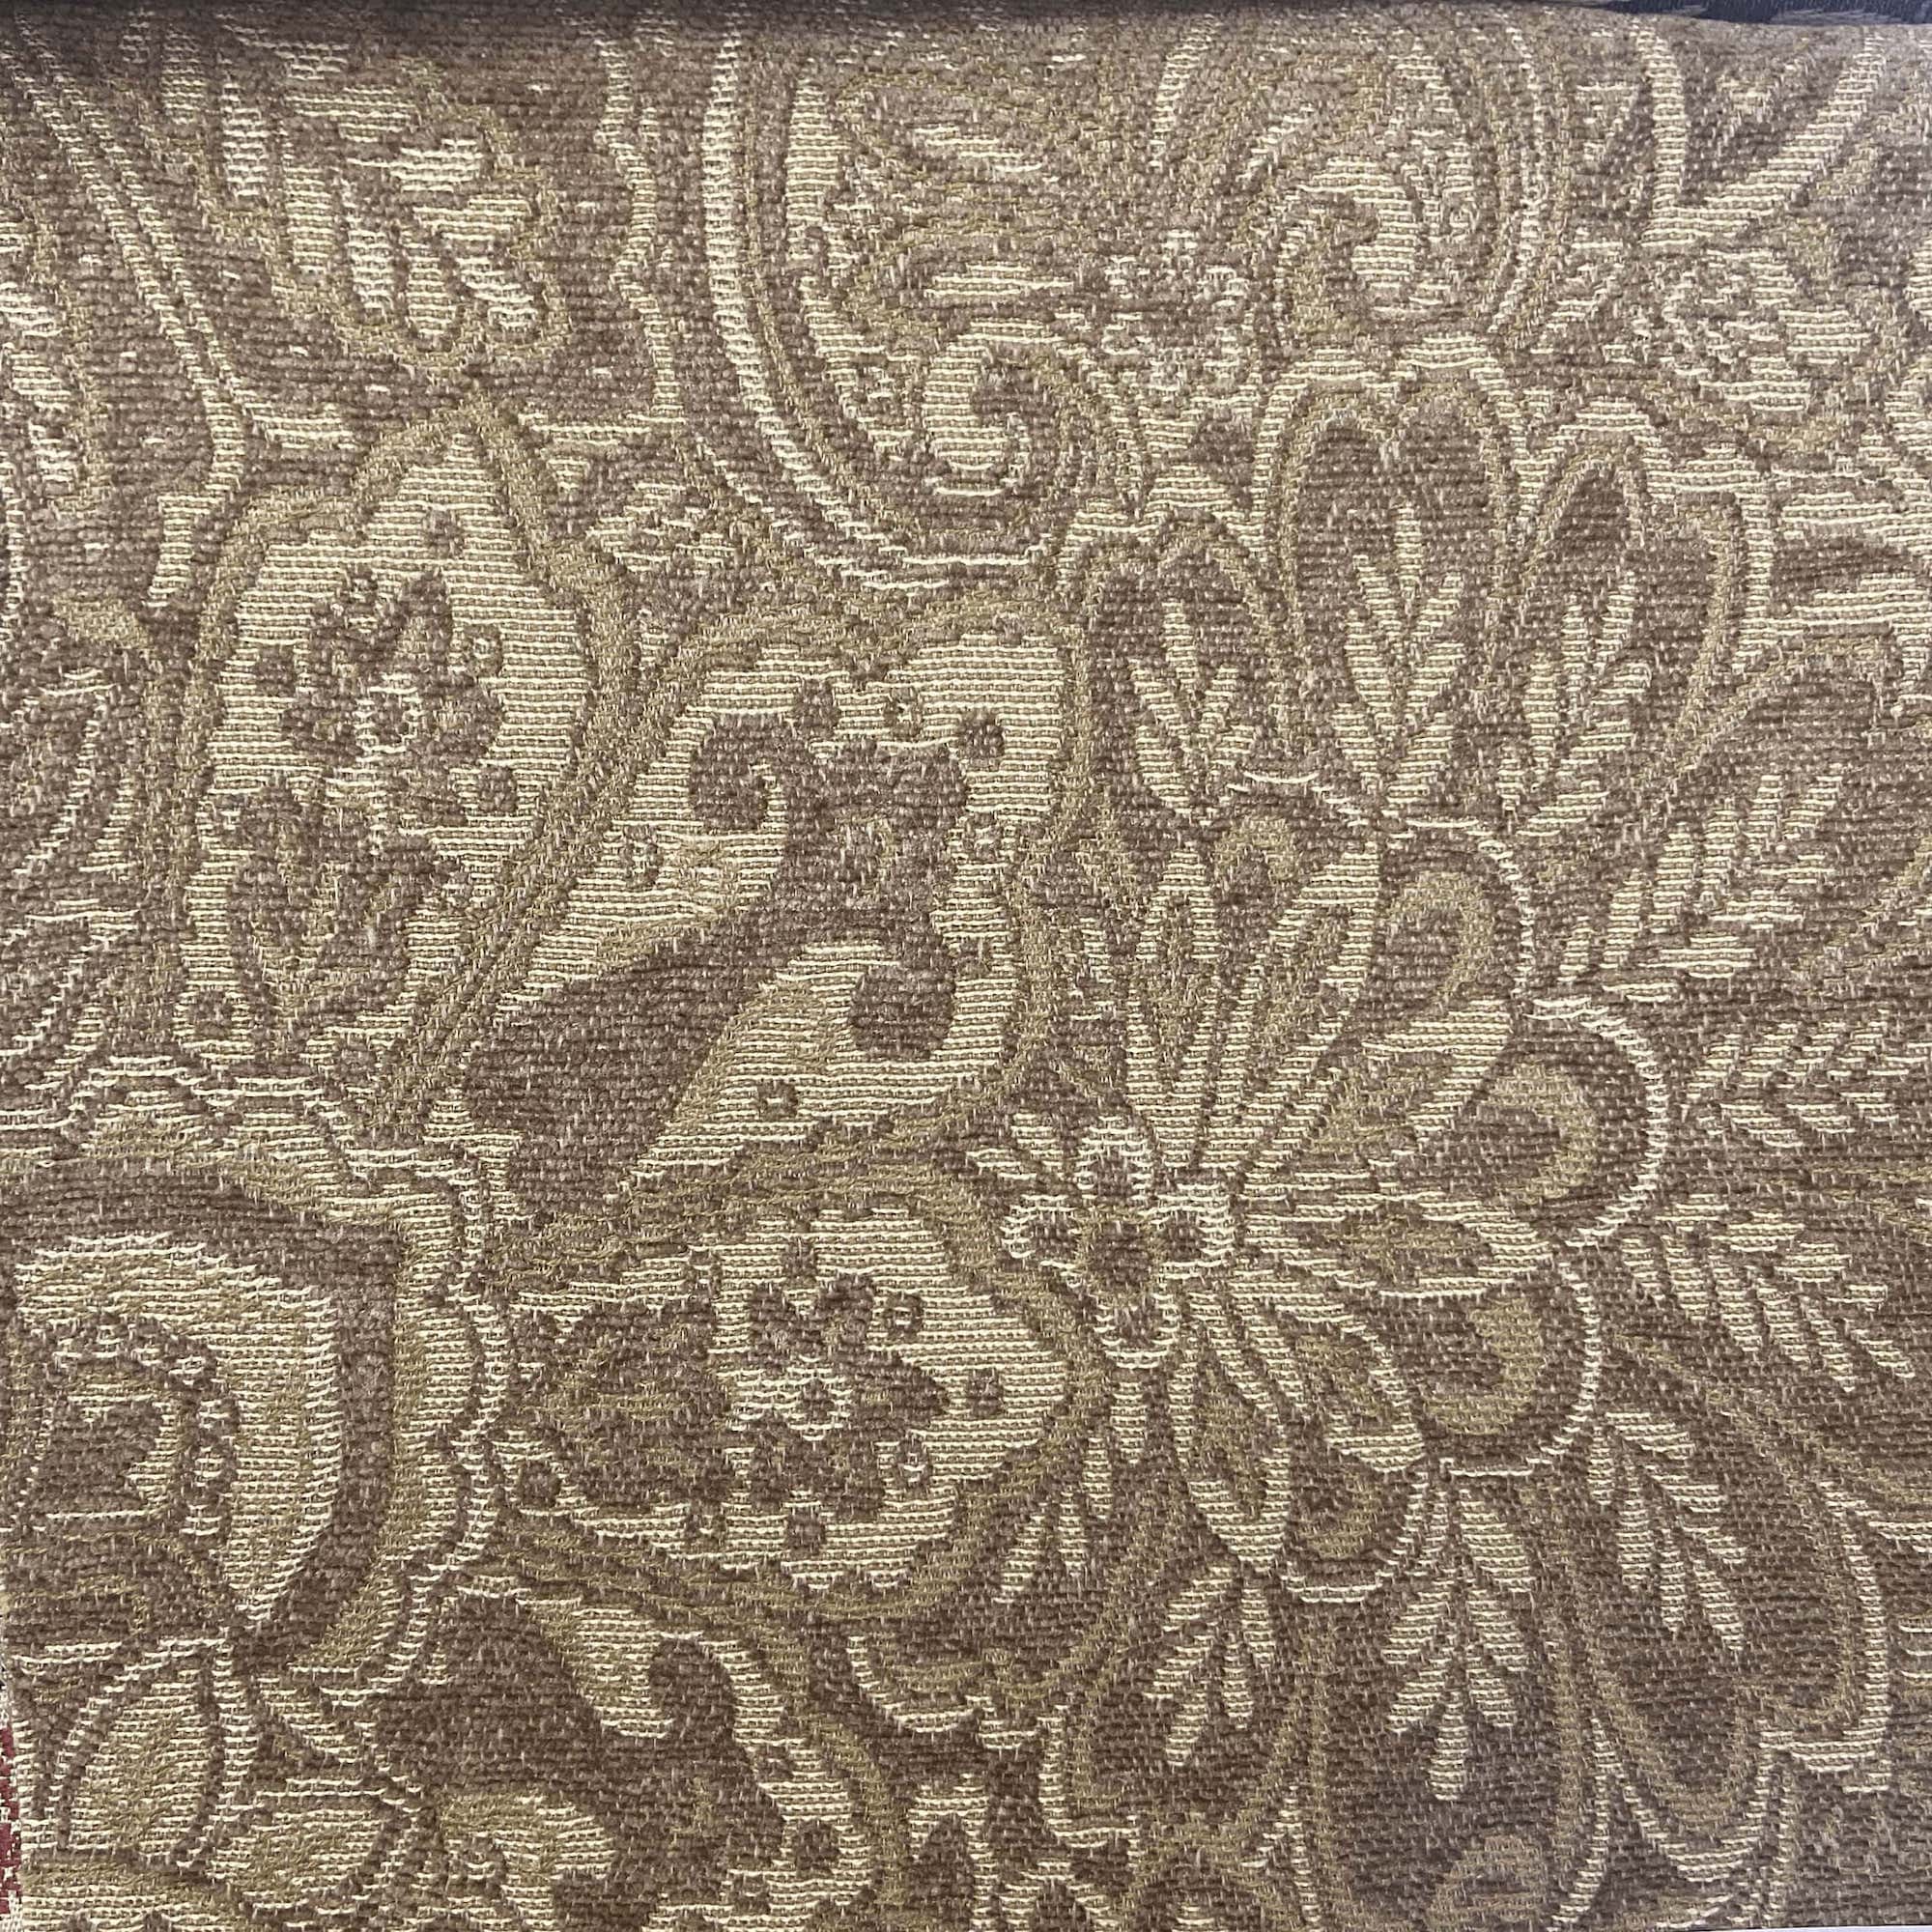 Yellowish Beige Textured Chenille Fabric